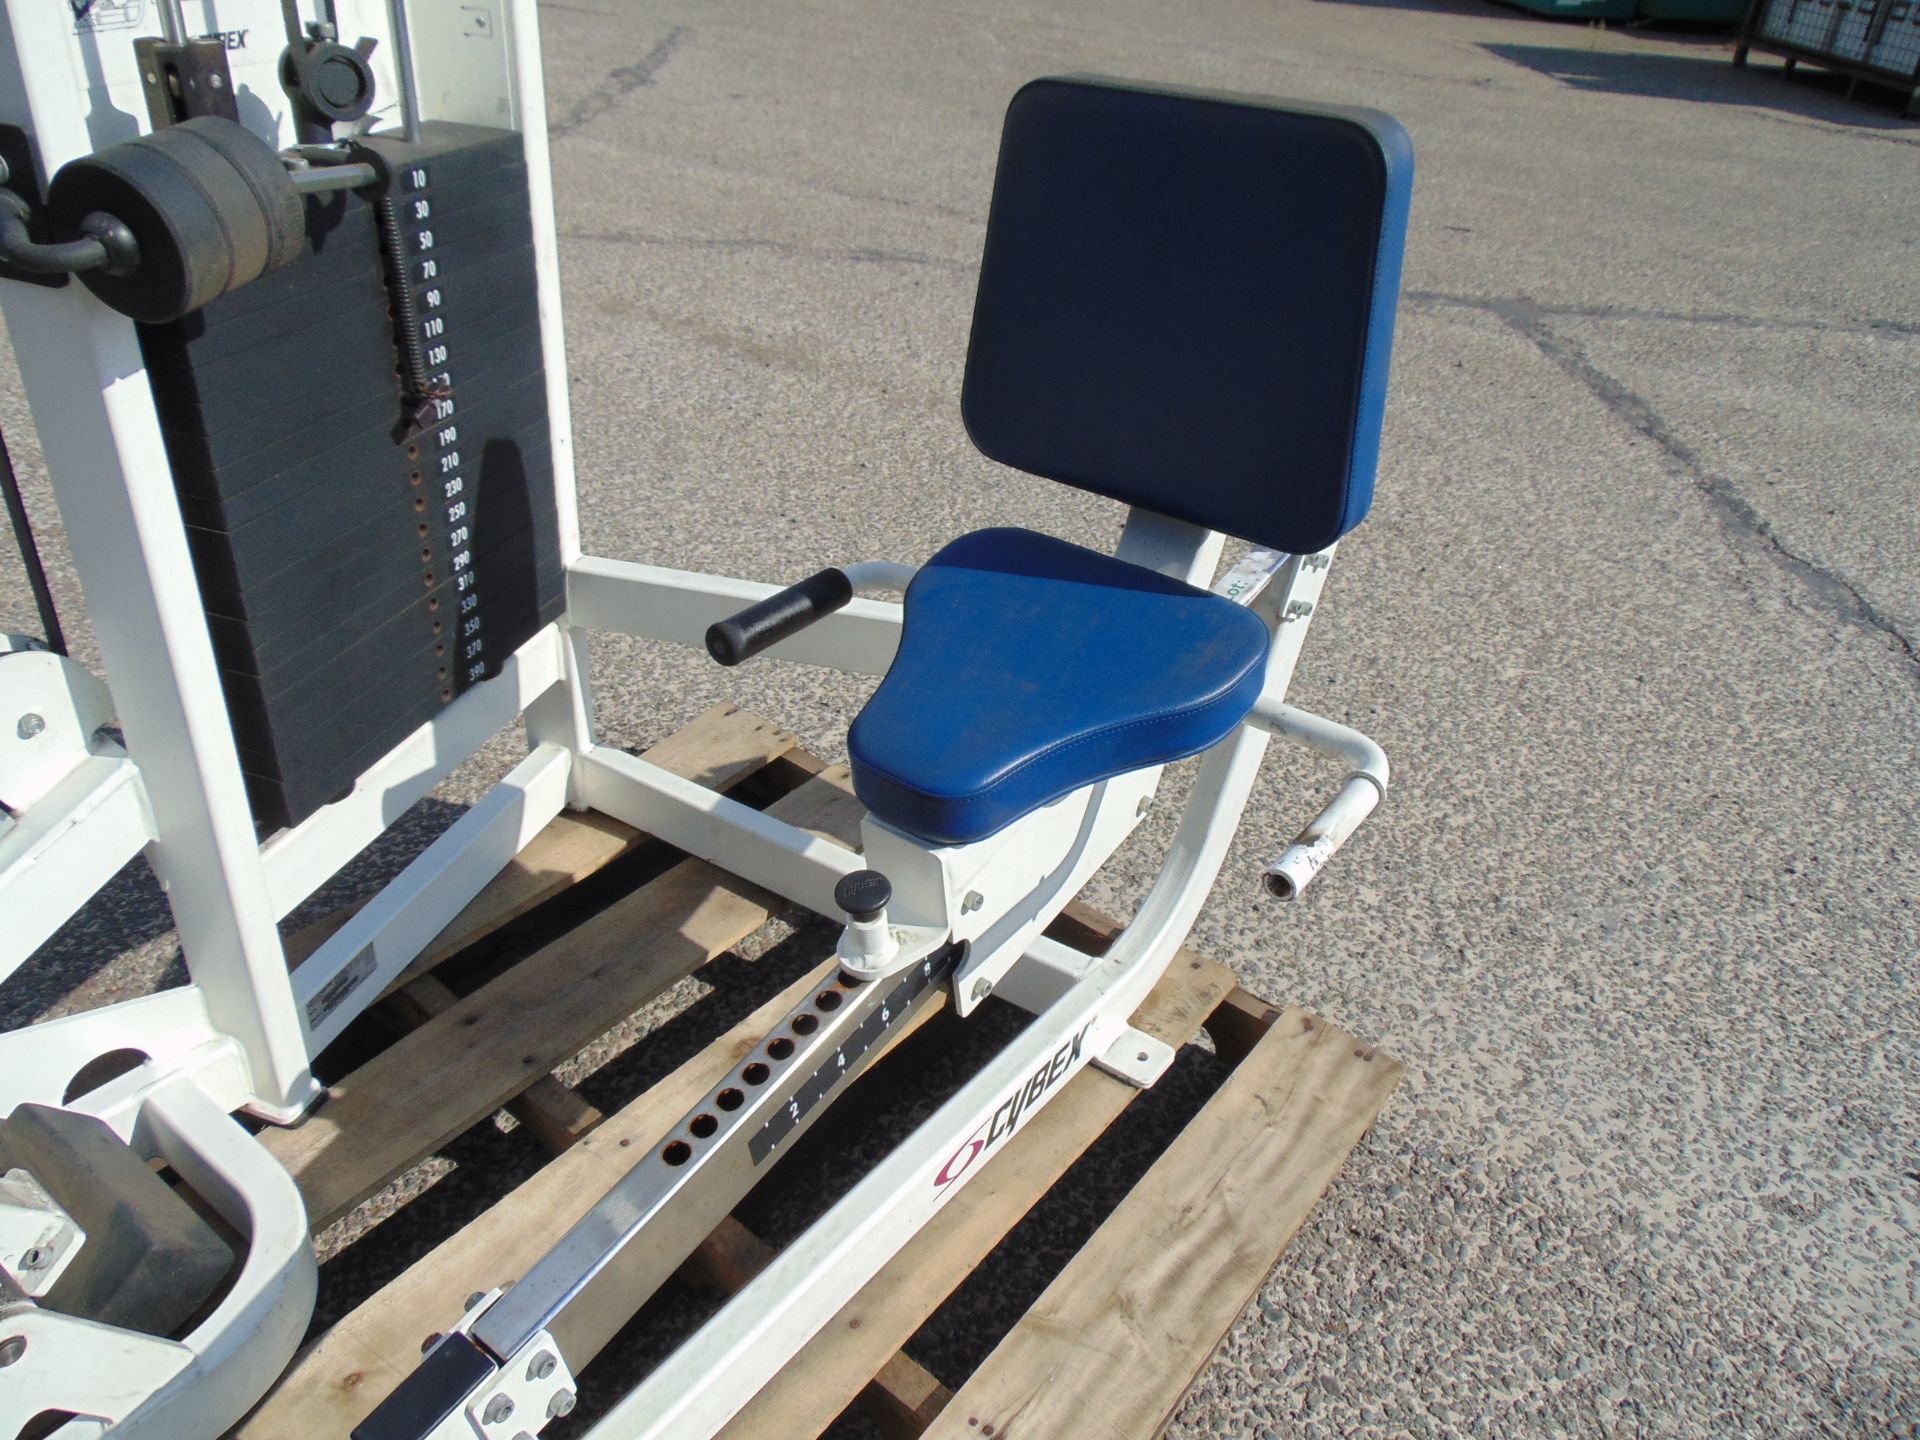 Cybex Rotary Calf Exercise Machine - Image 9 of 11